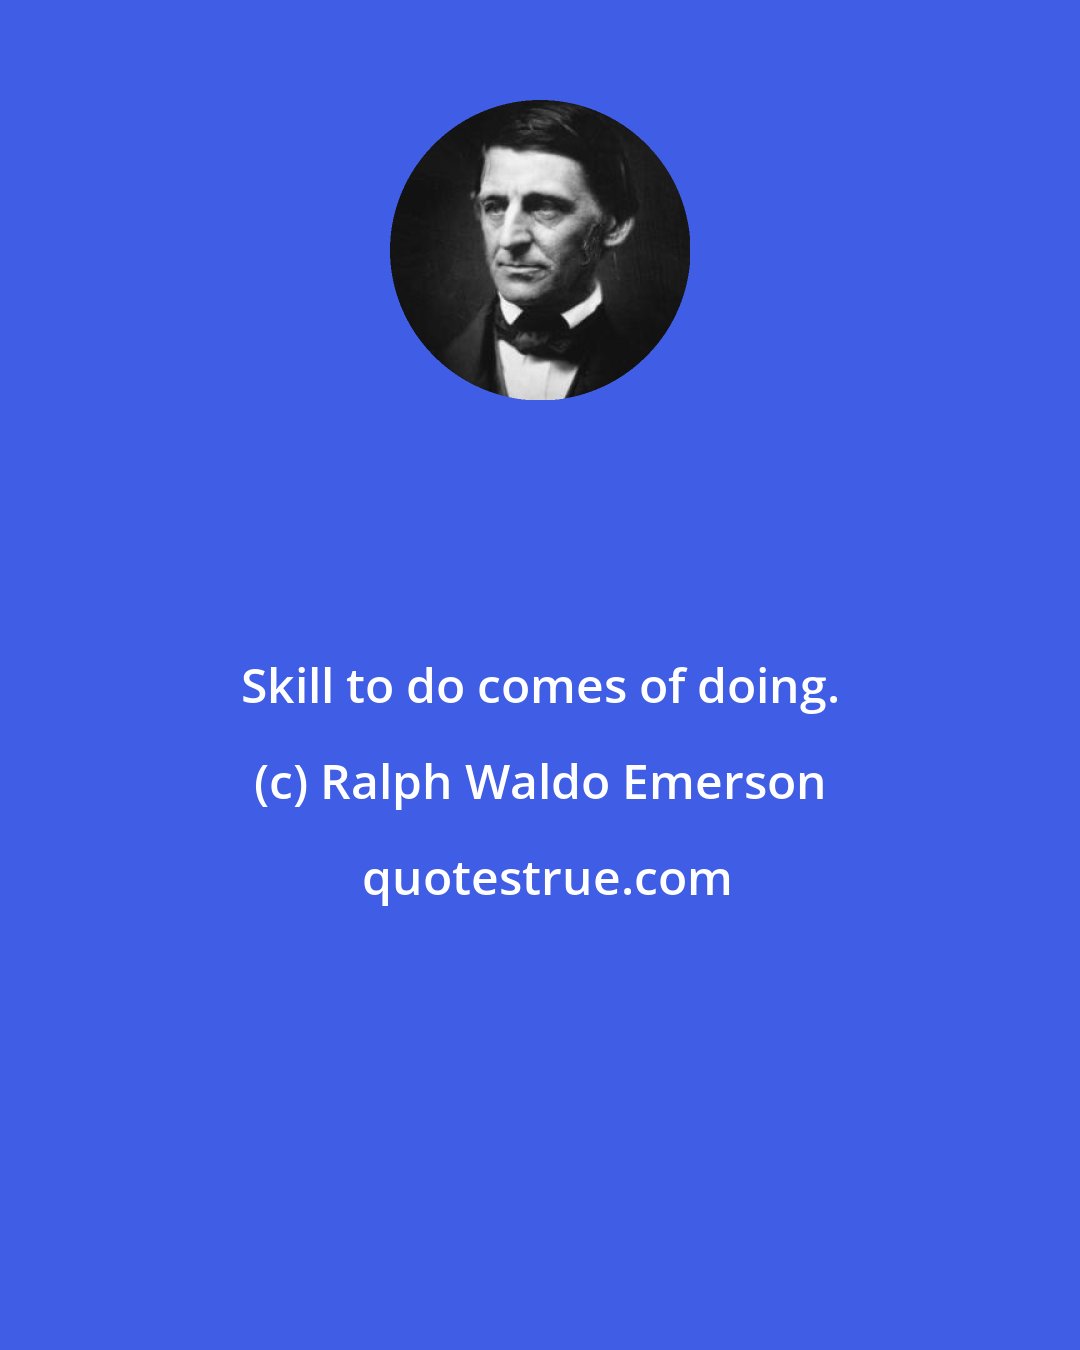 Ralph Waldo Emerson: Skill to do comes of doing.